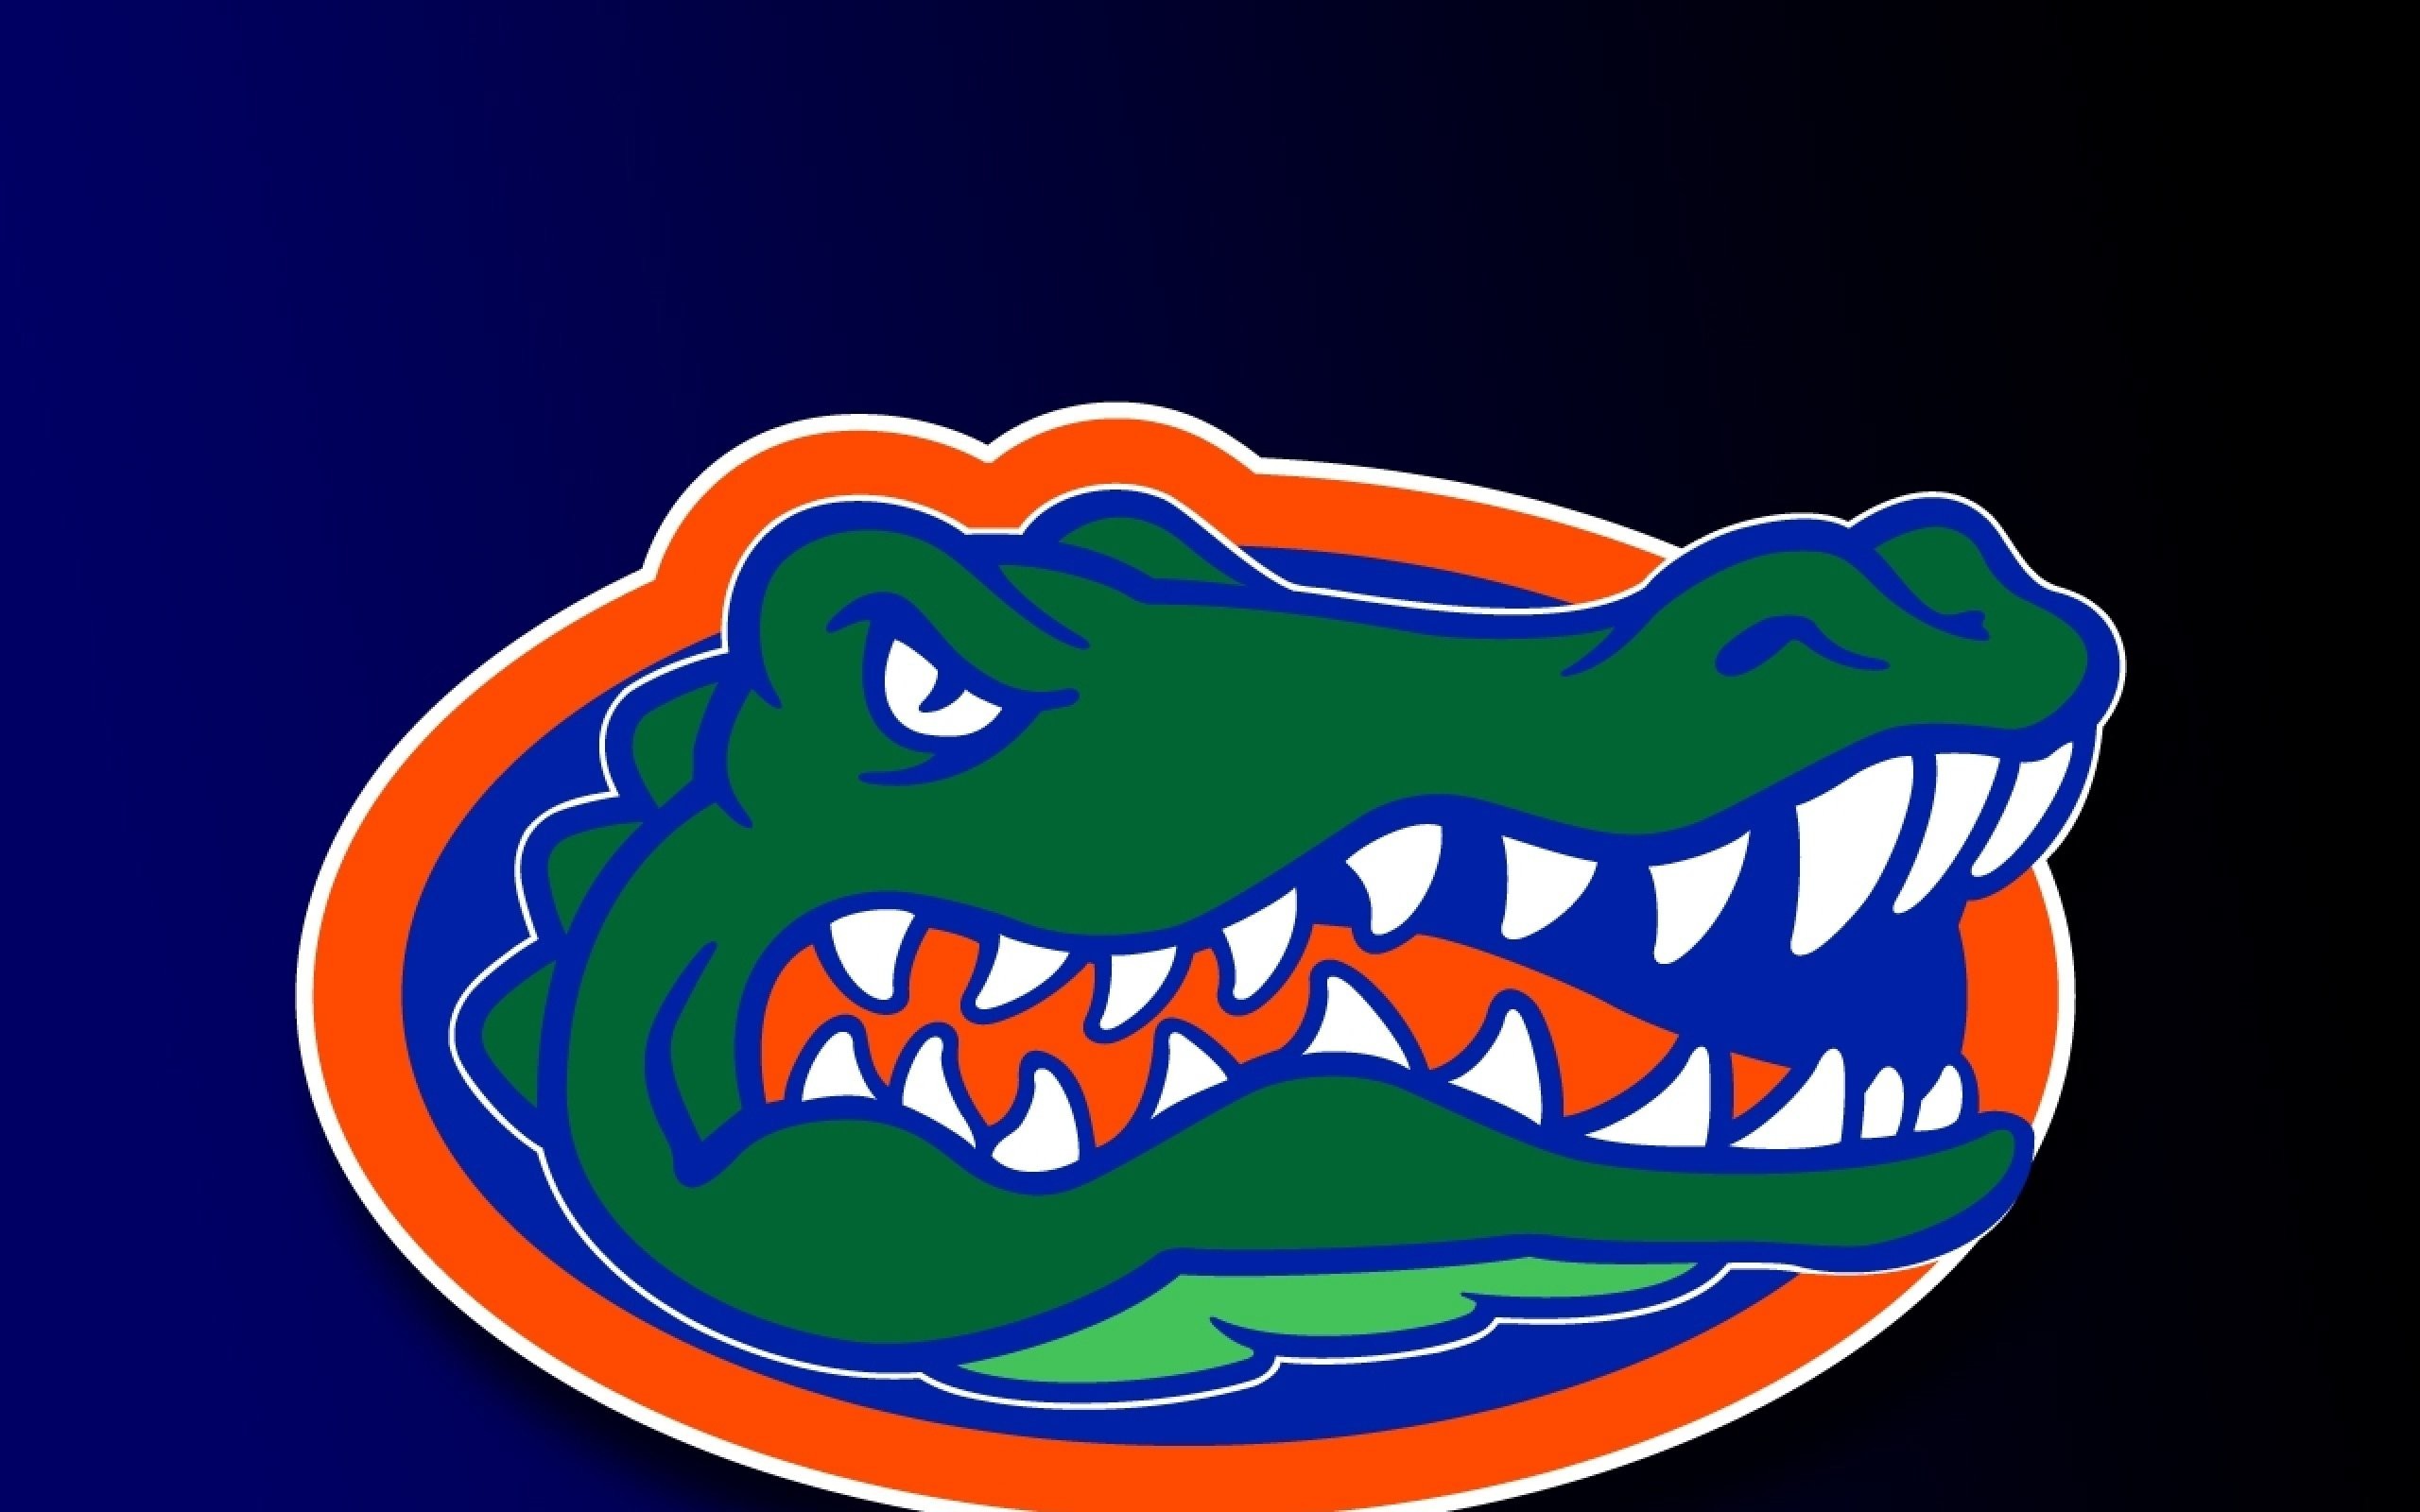 Florida Gators College Football Wallpaper - Florida Gators Basketball Logo - HD Wallpaper 